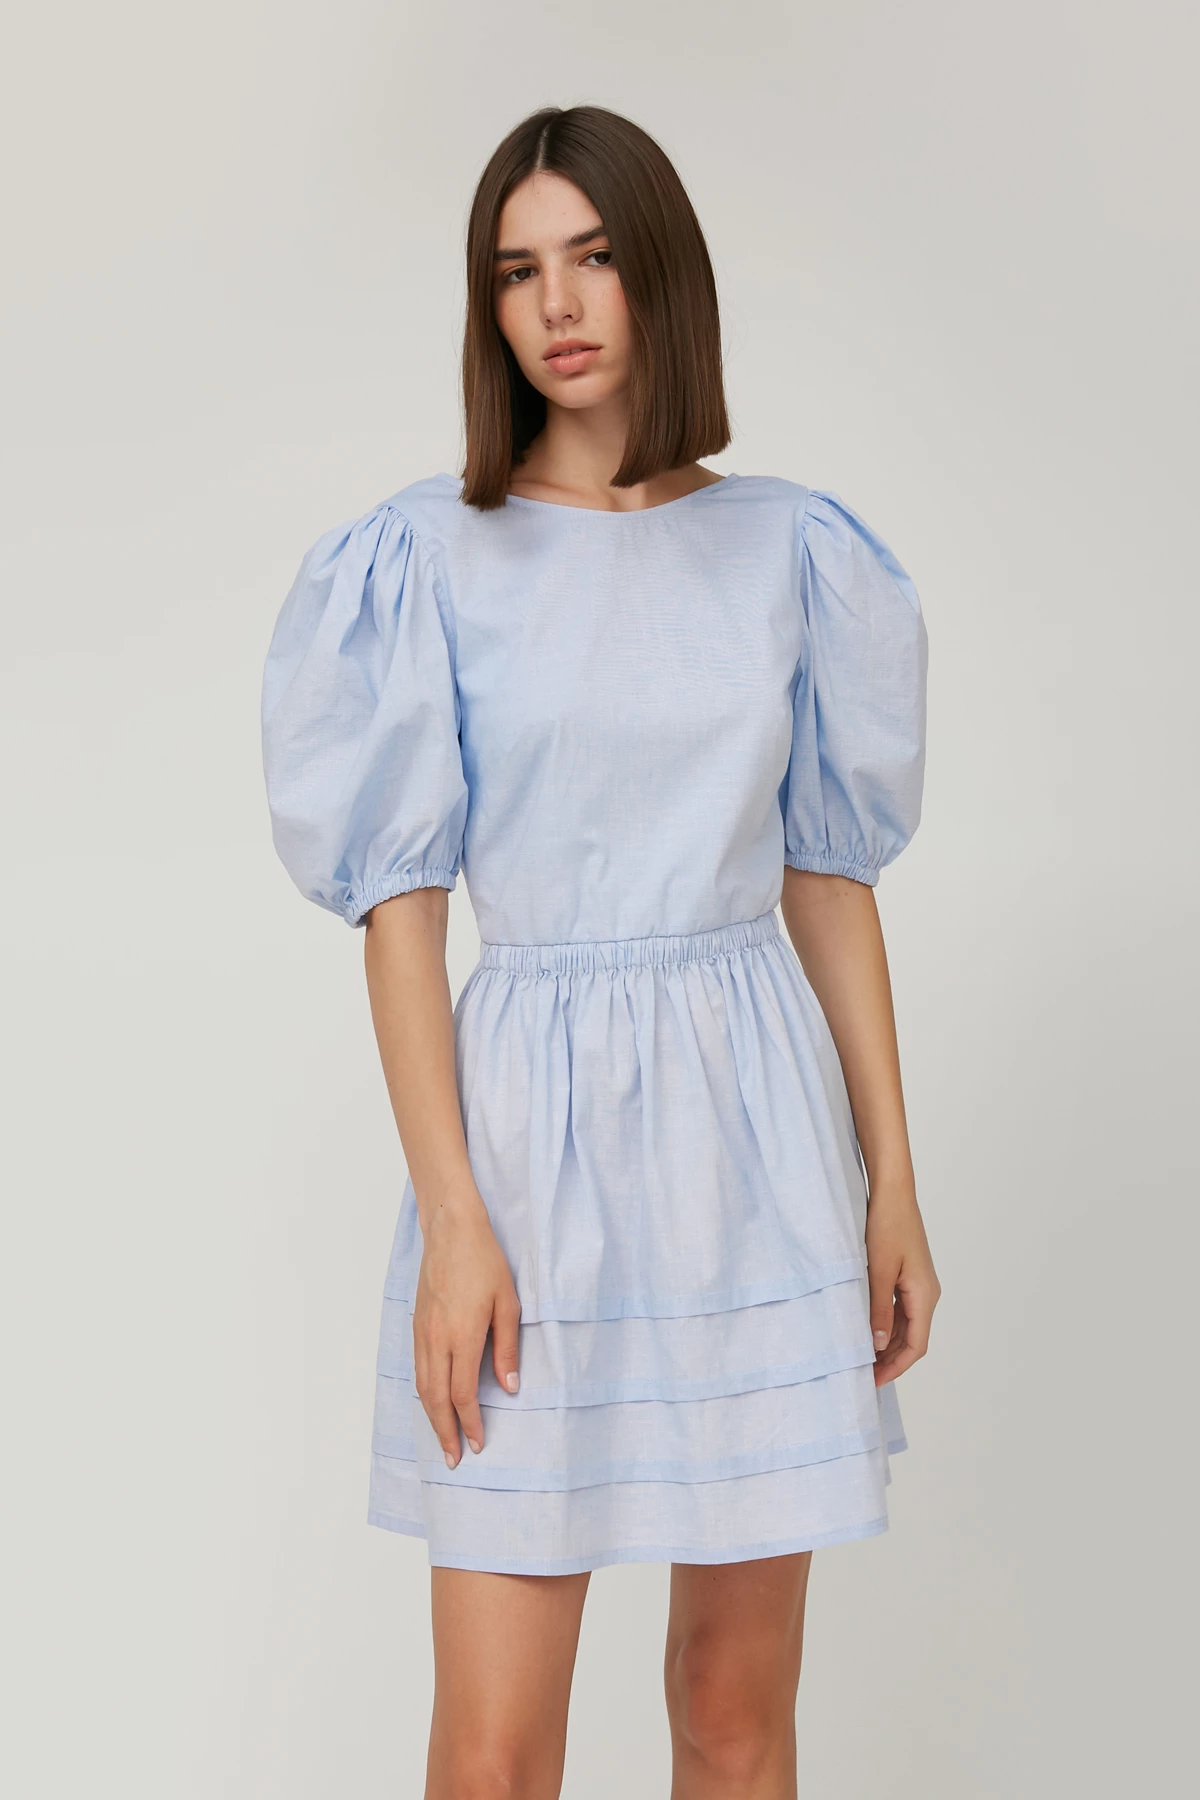 Blue short shirt fabric dress, photo 3